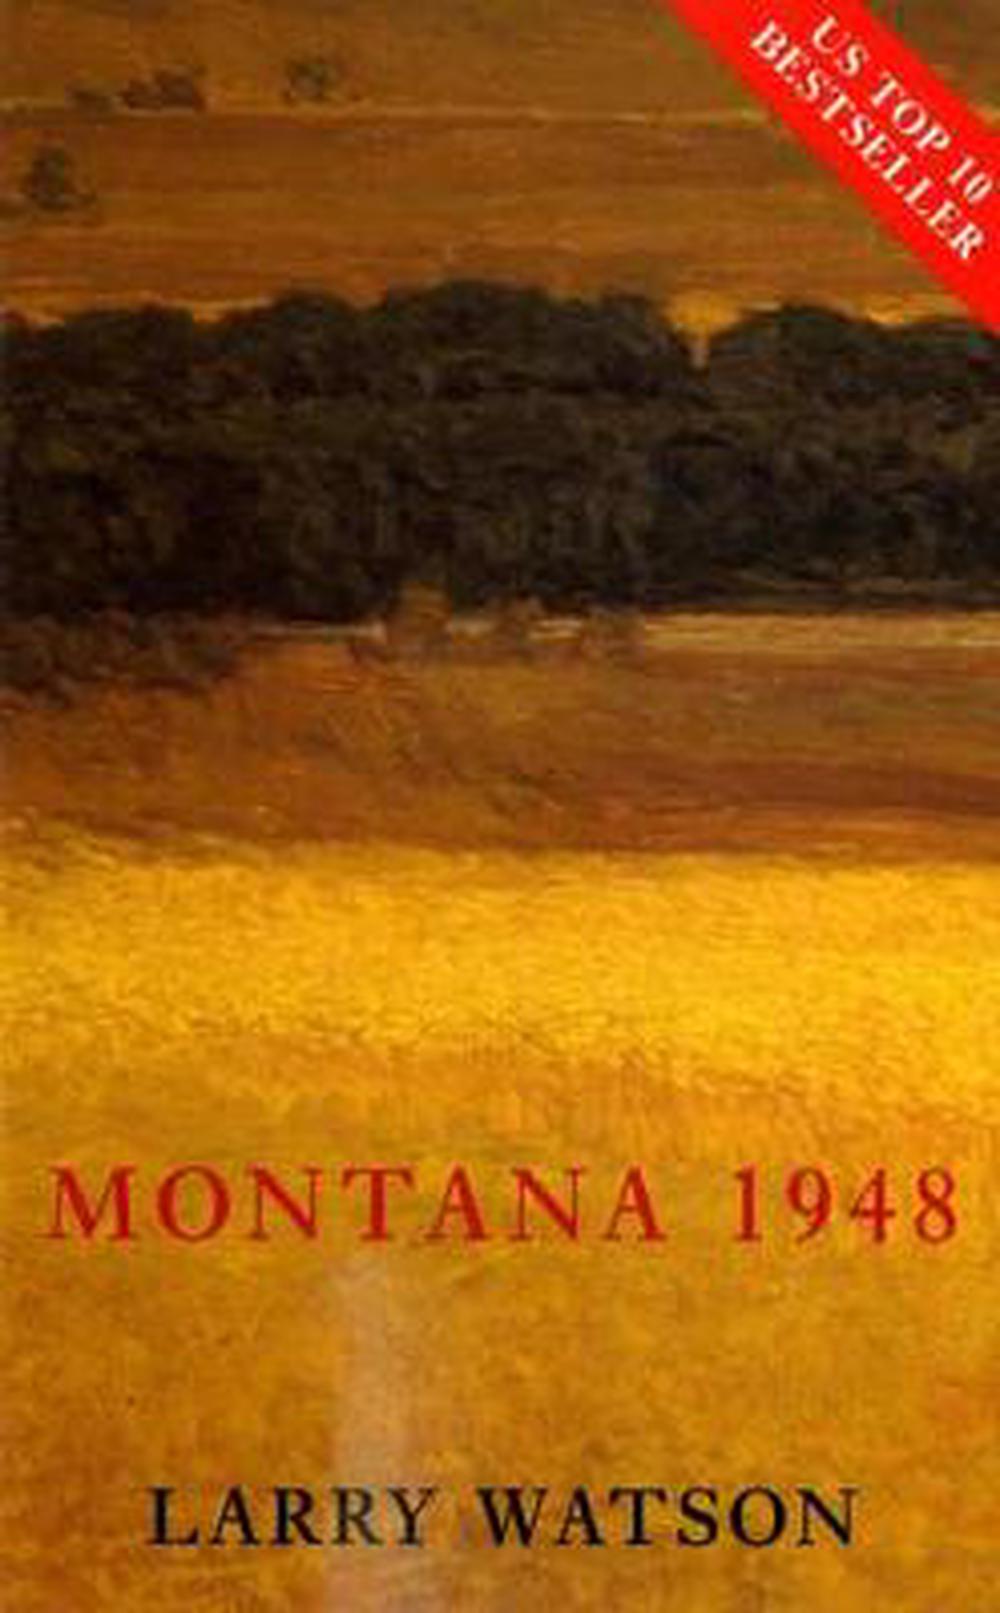 montana 1948 audio book download